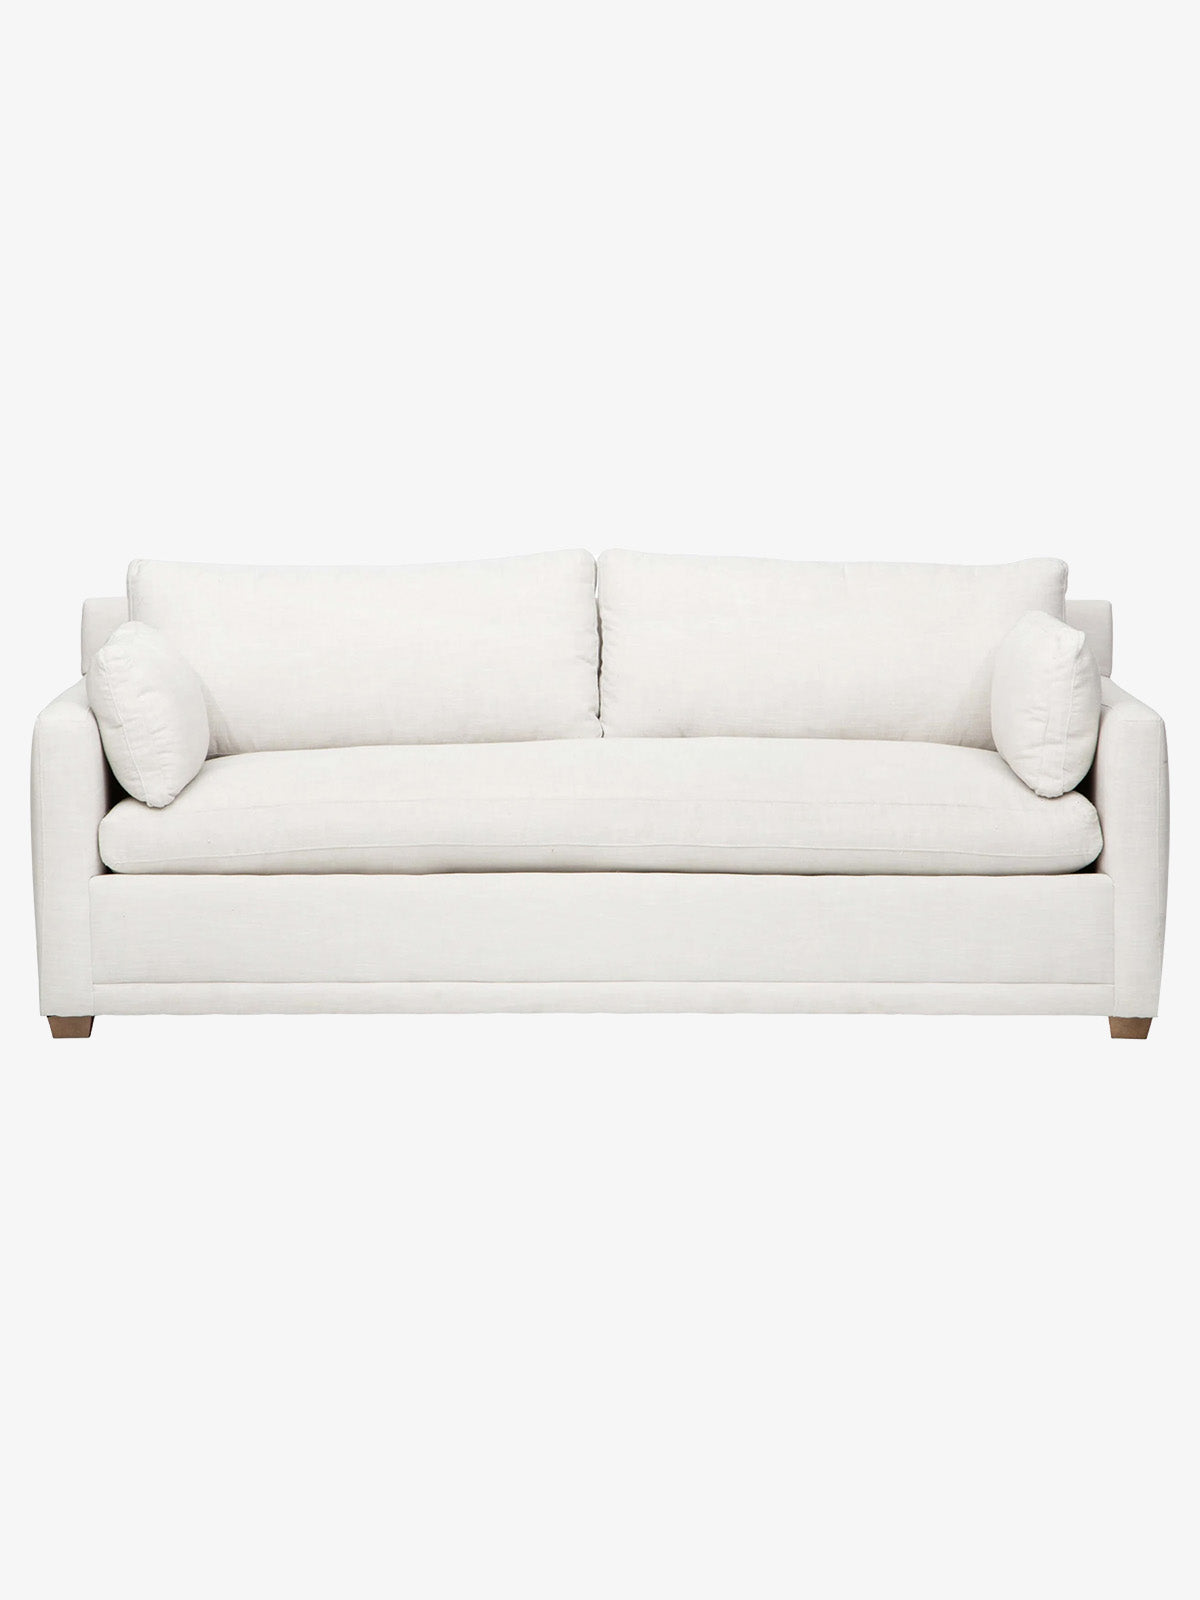 Sylvie Upholstered Bench Seat Sofa